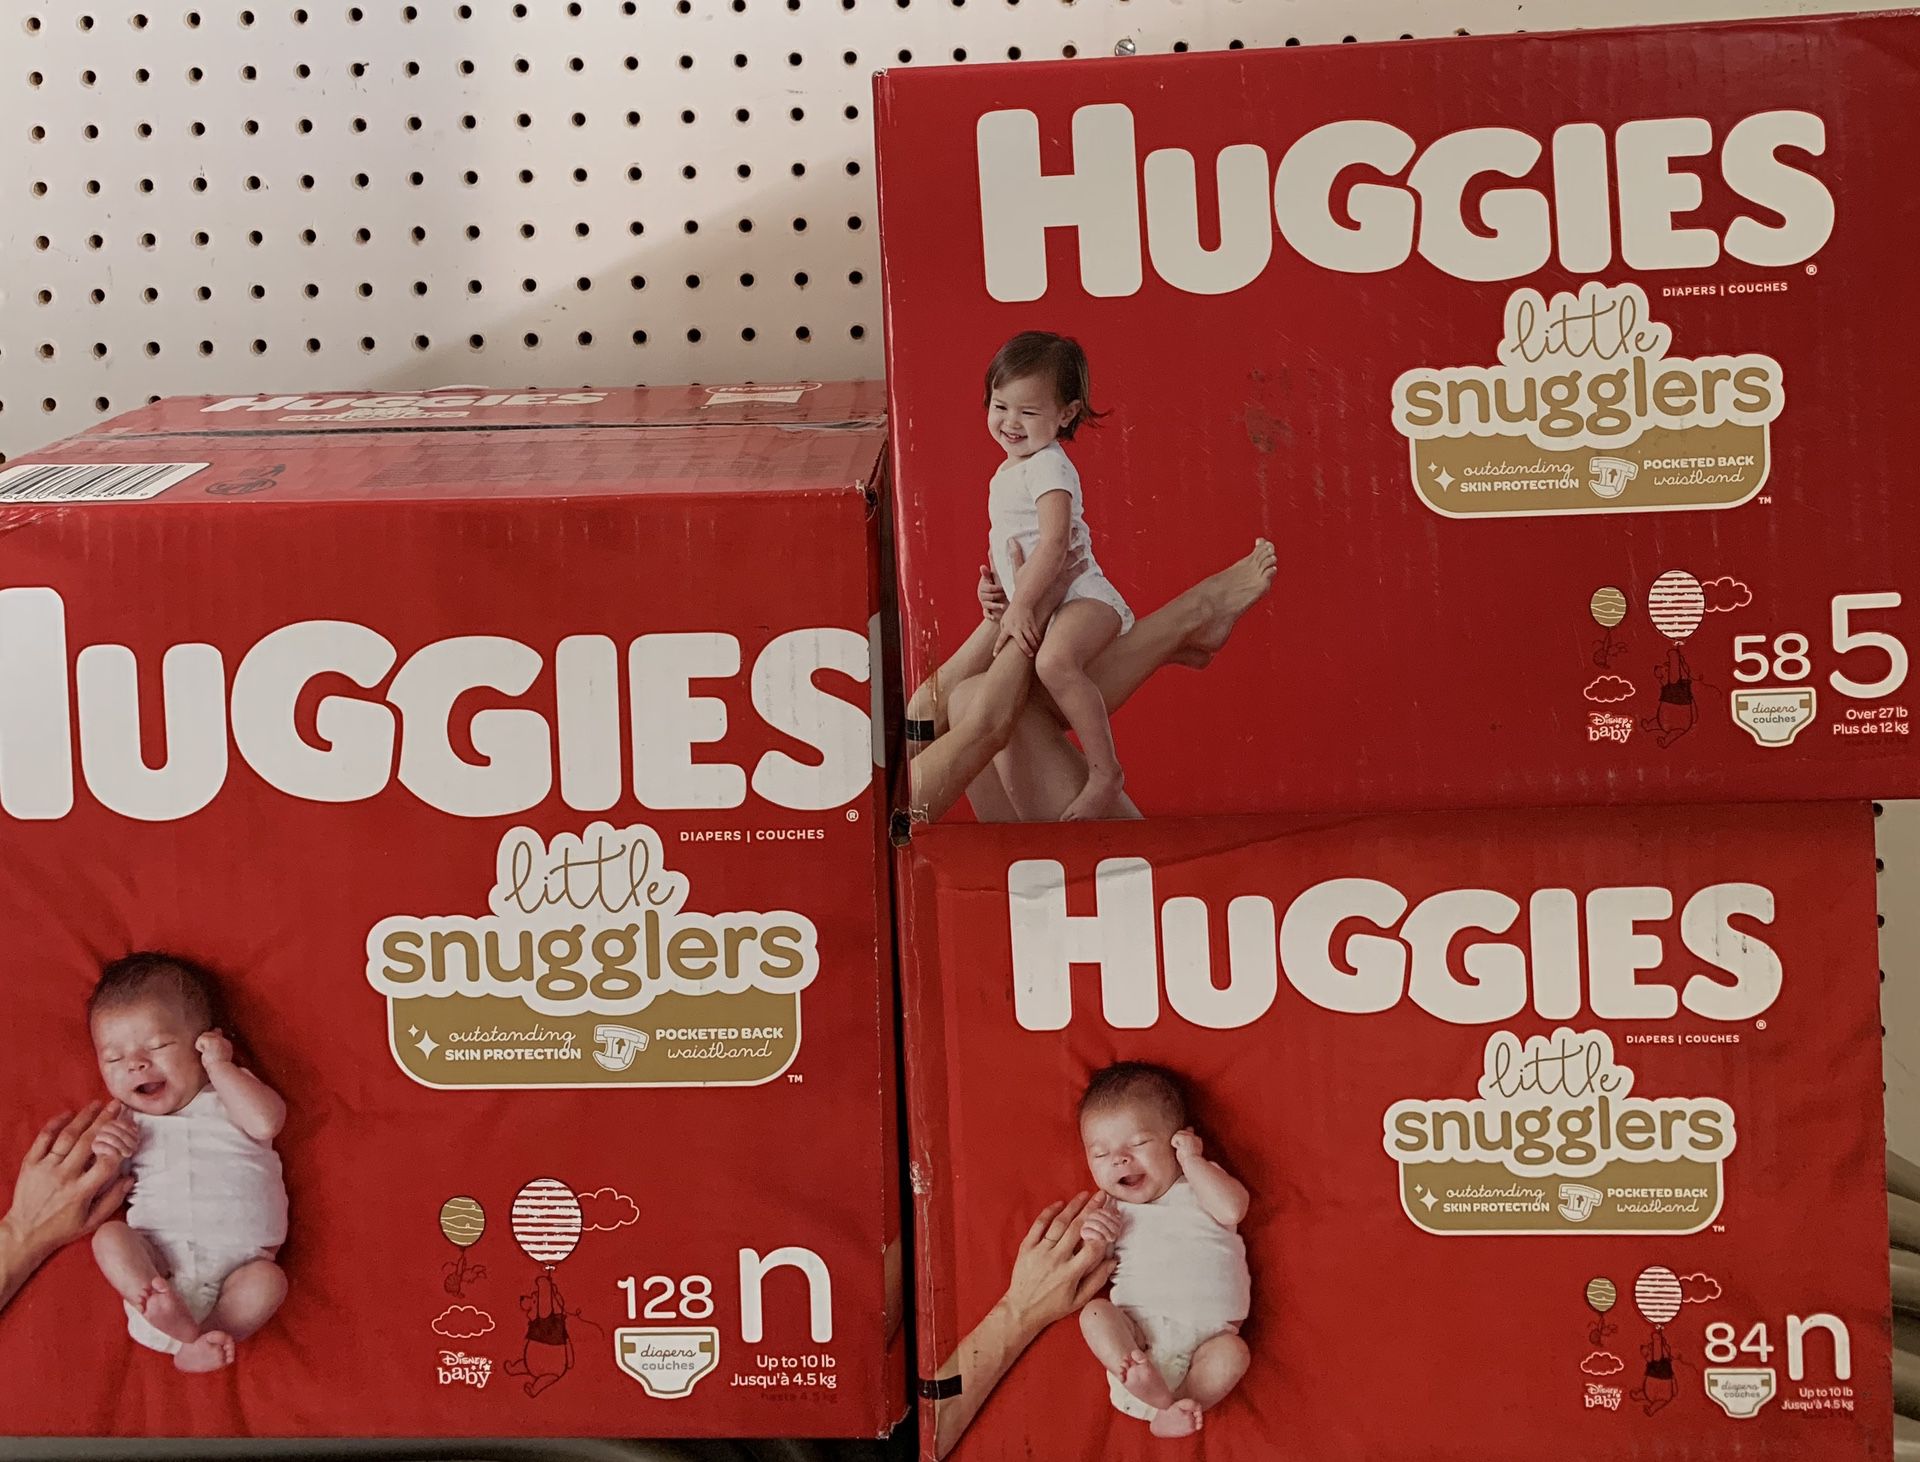 Huggies little snugglers